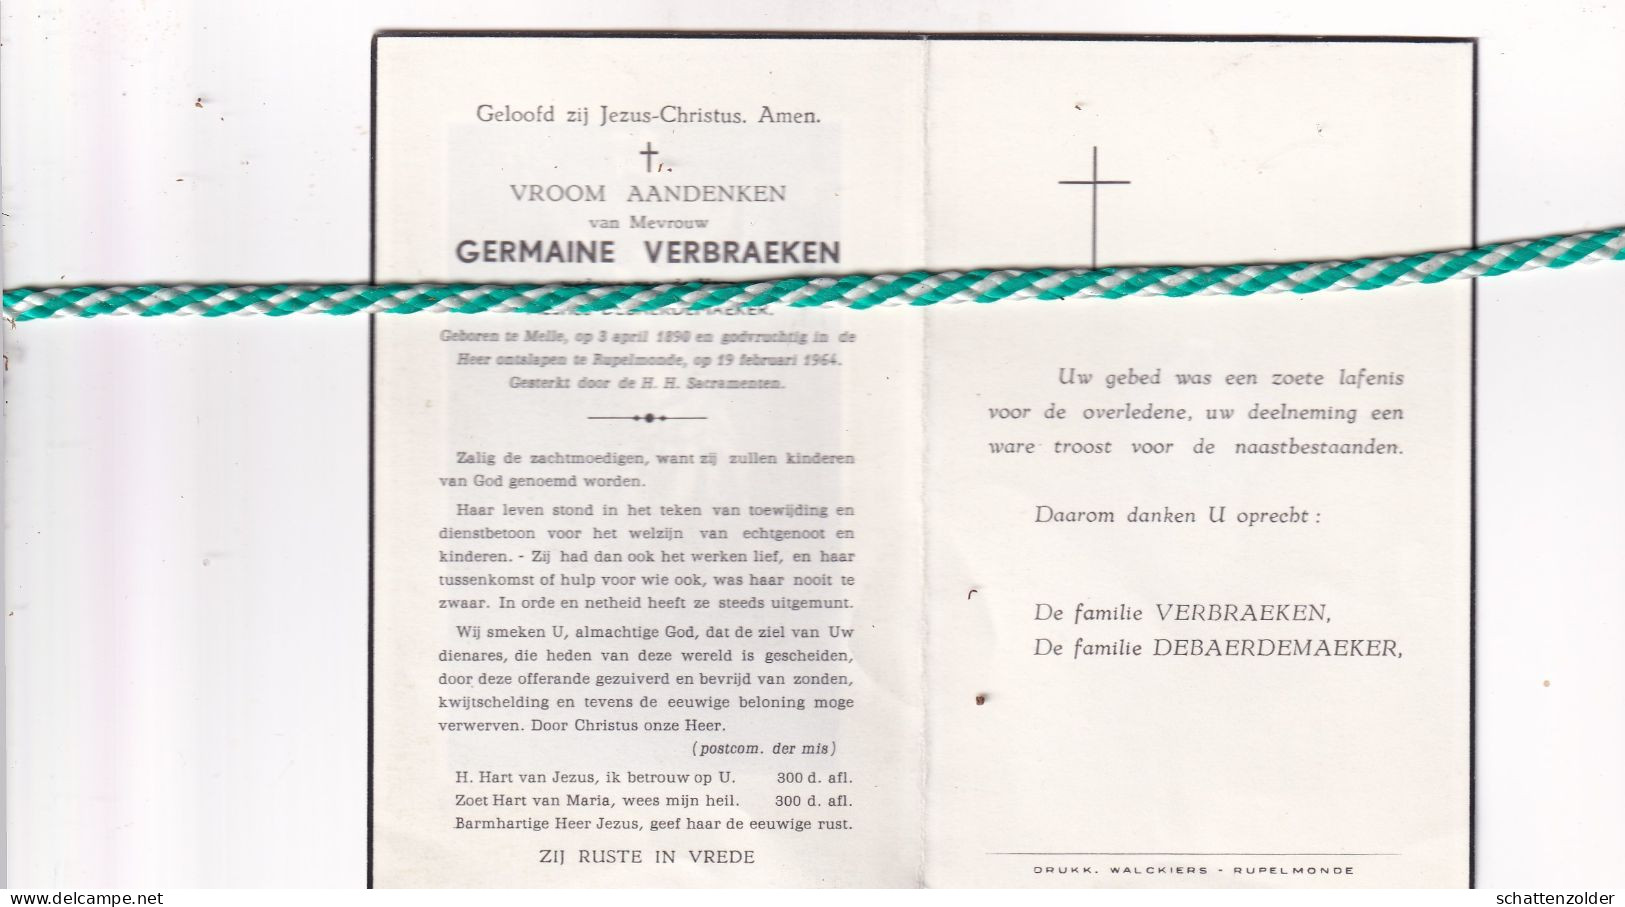 Germaine Verbraeken-Debaerdemaeker, Melle 1890, Rupelmonde 1964 - Obituary Notices